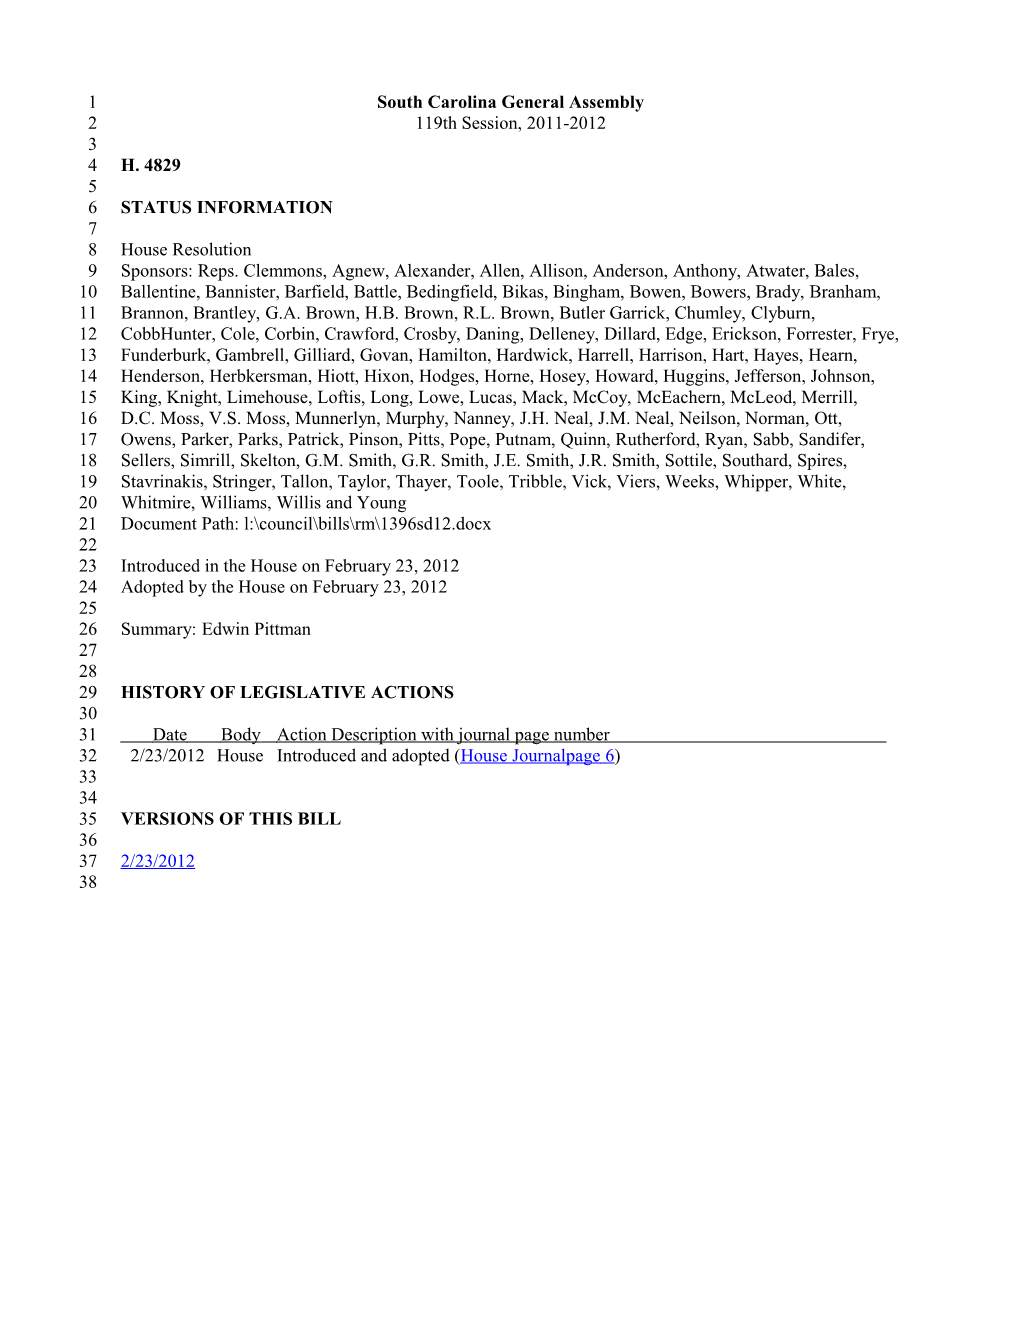 2011-2012 Bill 4829: Edwin Pittman - South Carolina Legislature Online